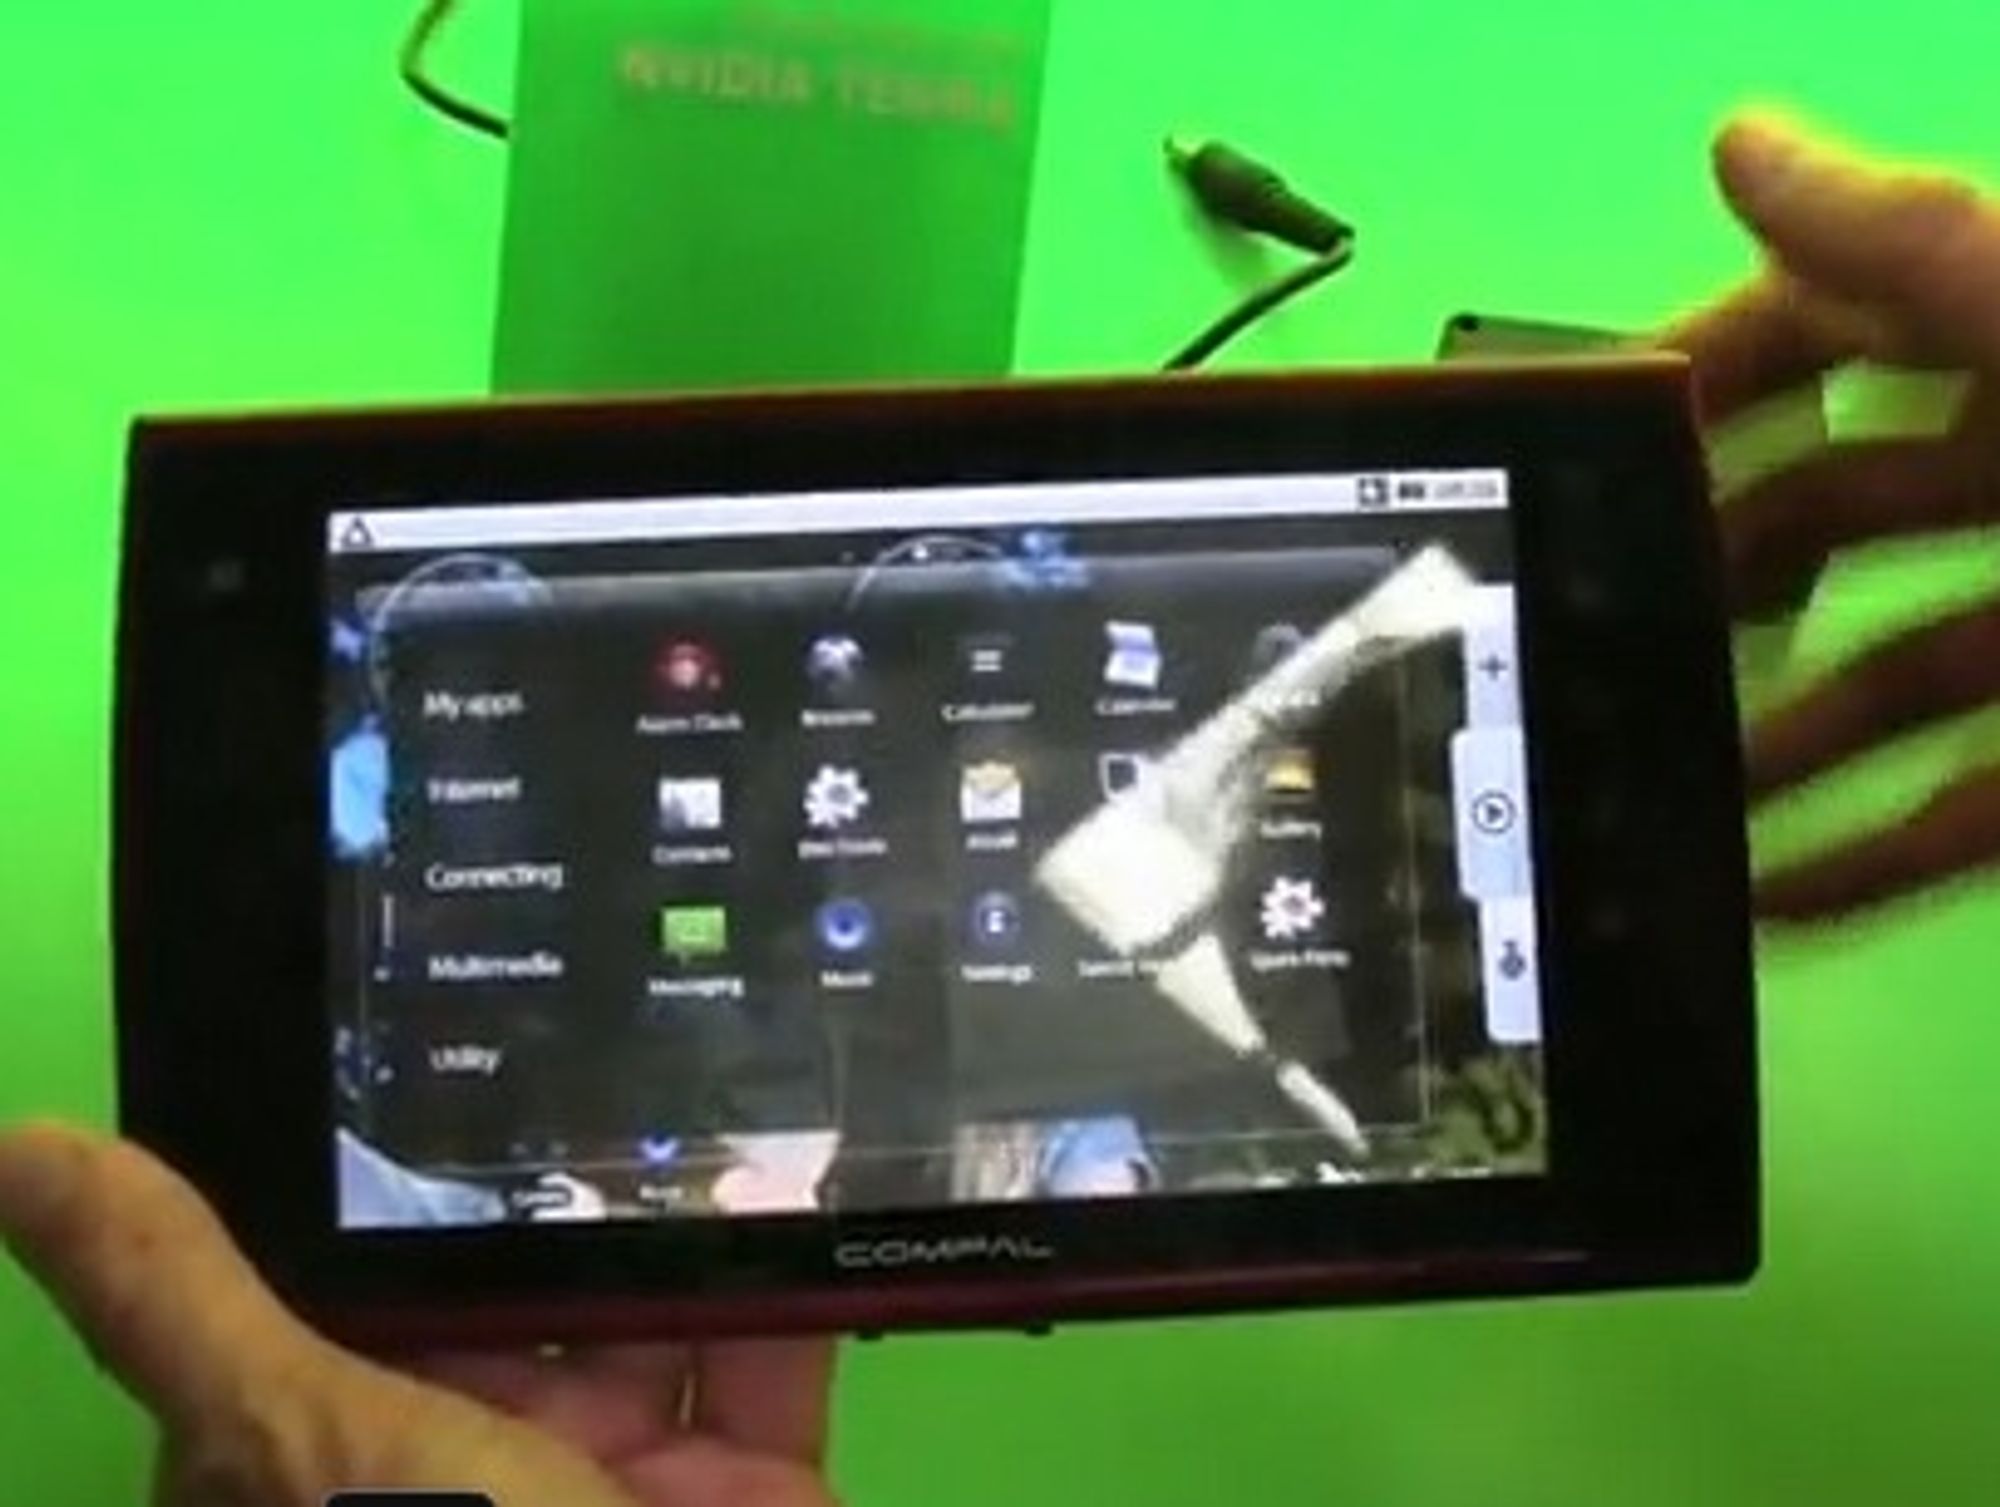 Compal tavle-pc med 7-tommers skjerm og Android.